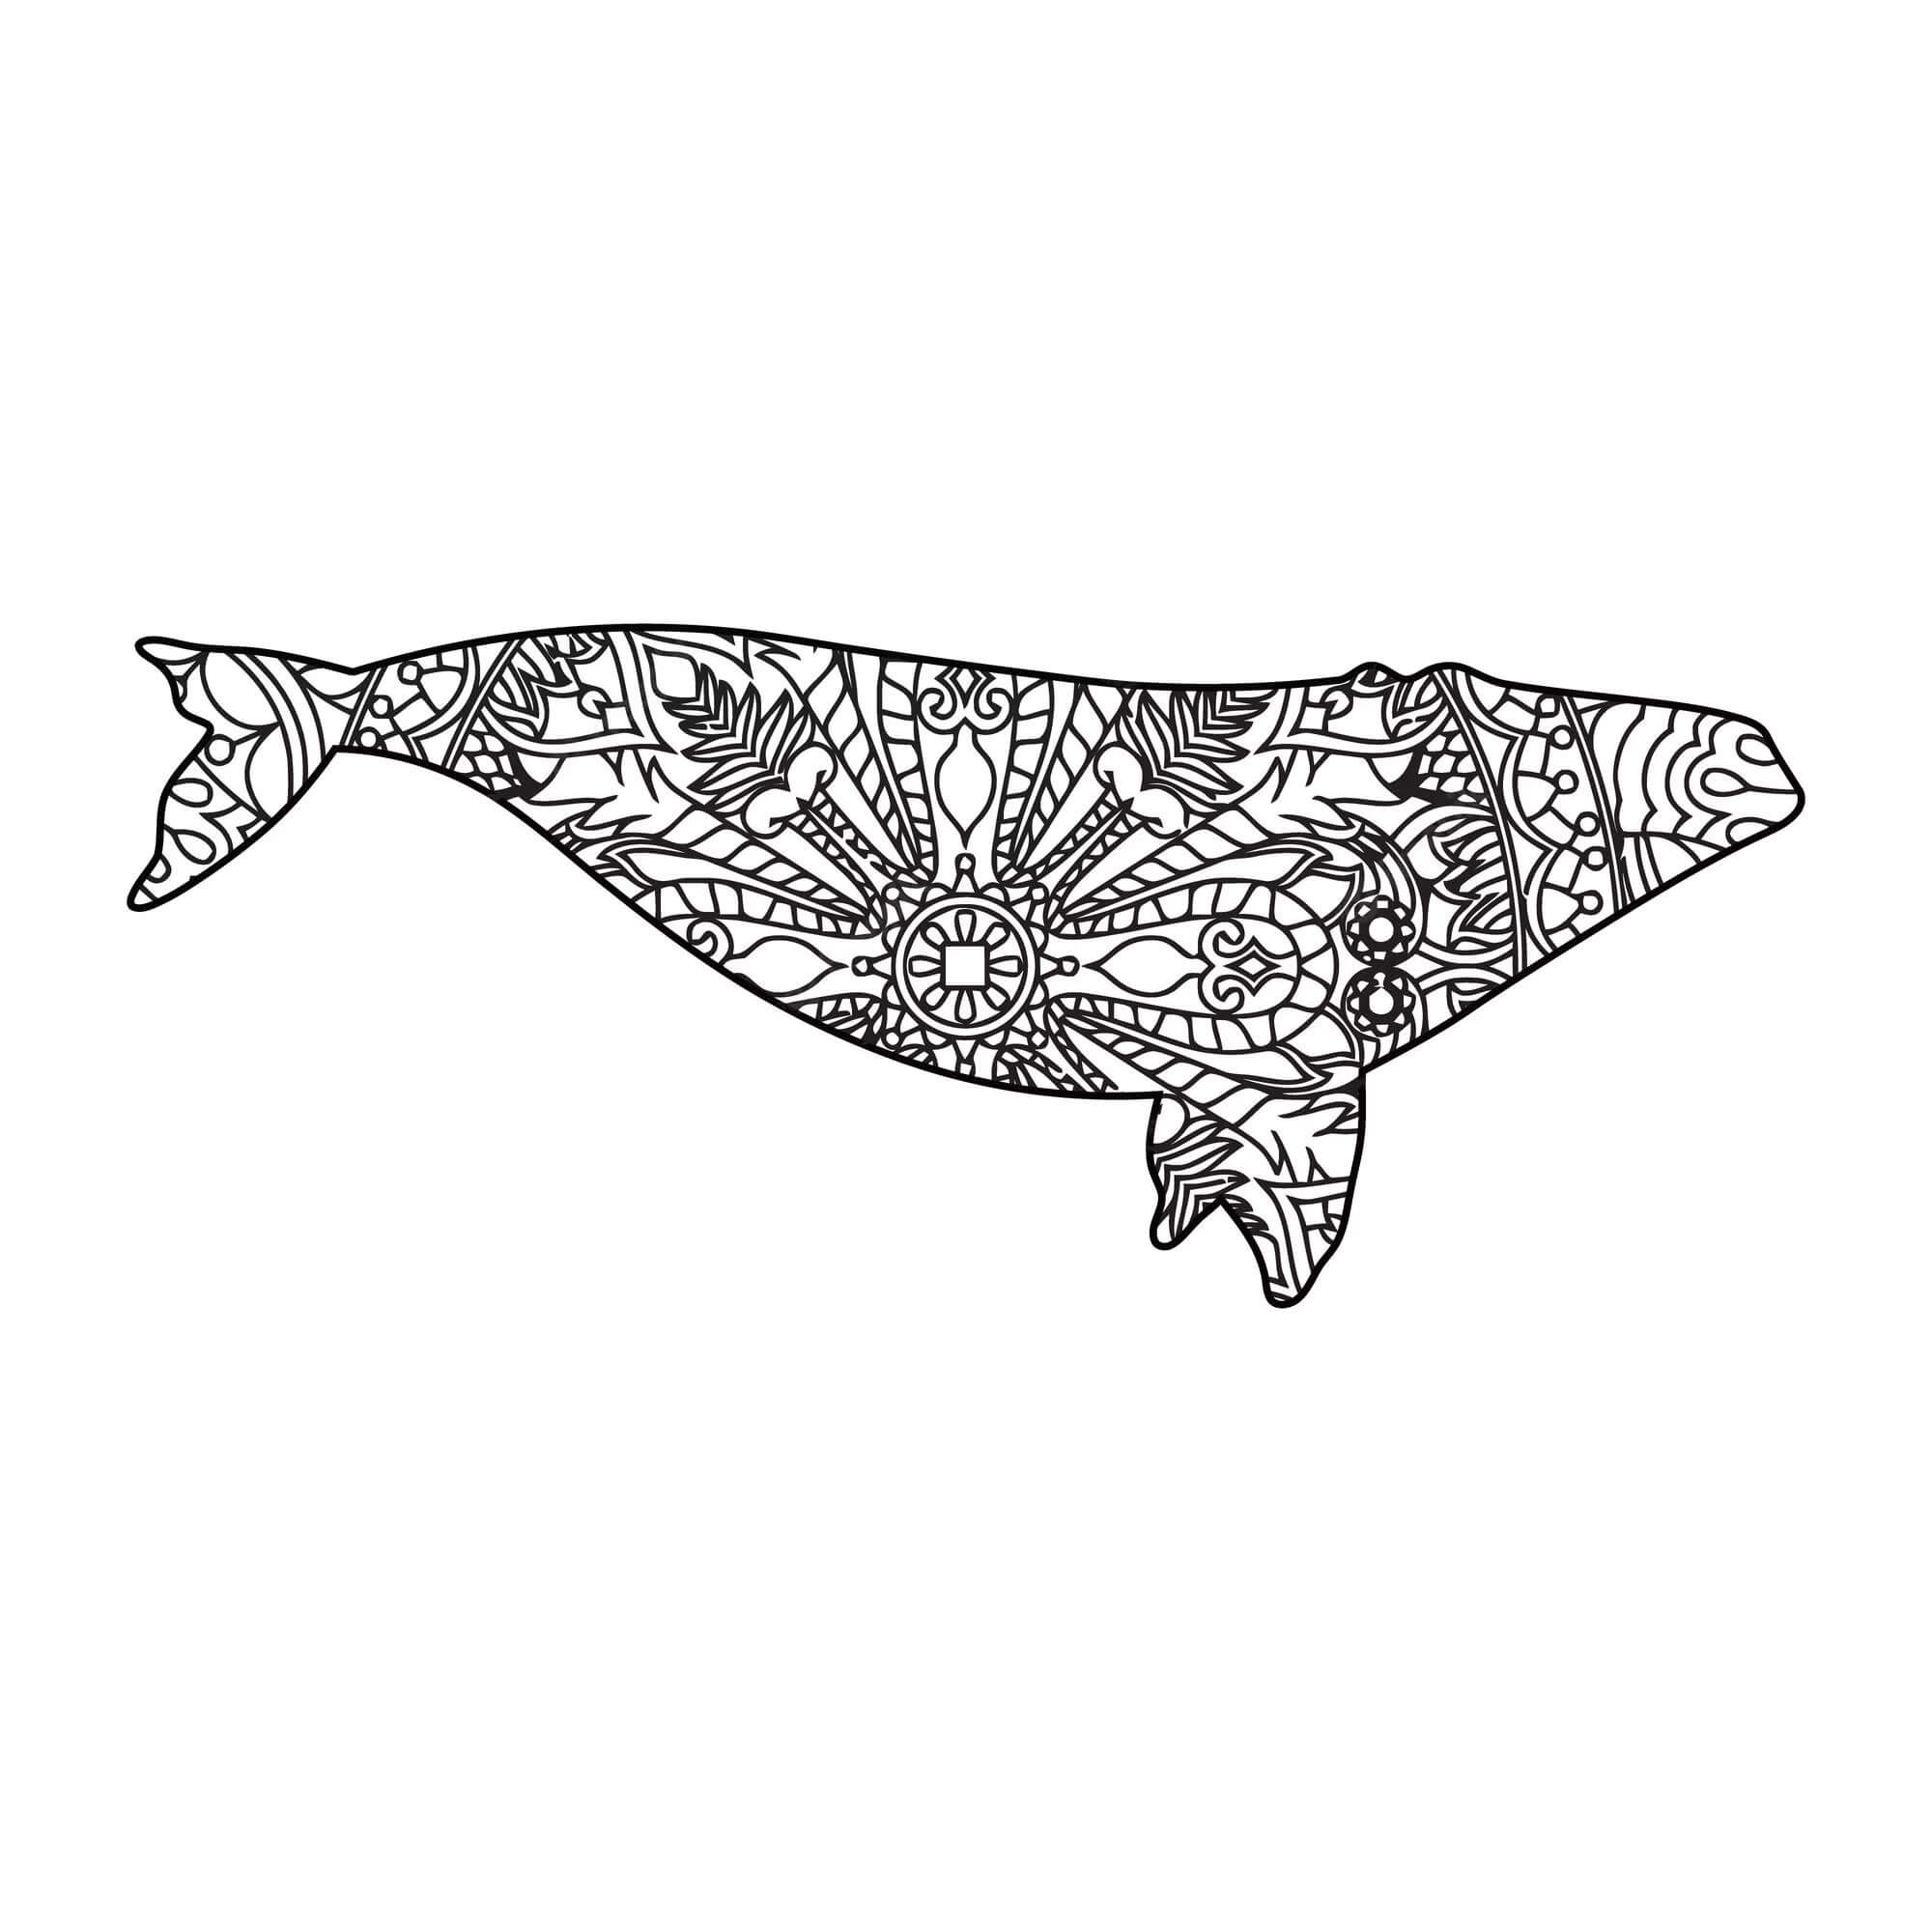 Mandala Whale Coloring Page - Sheet 8 Mandalas